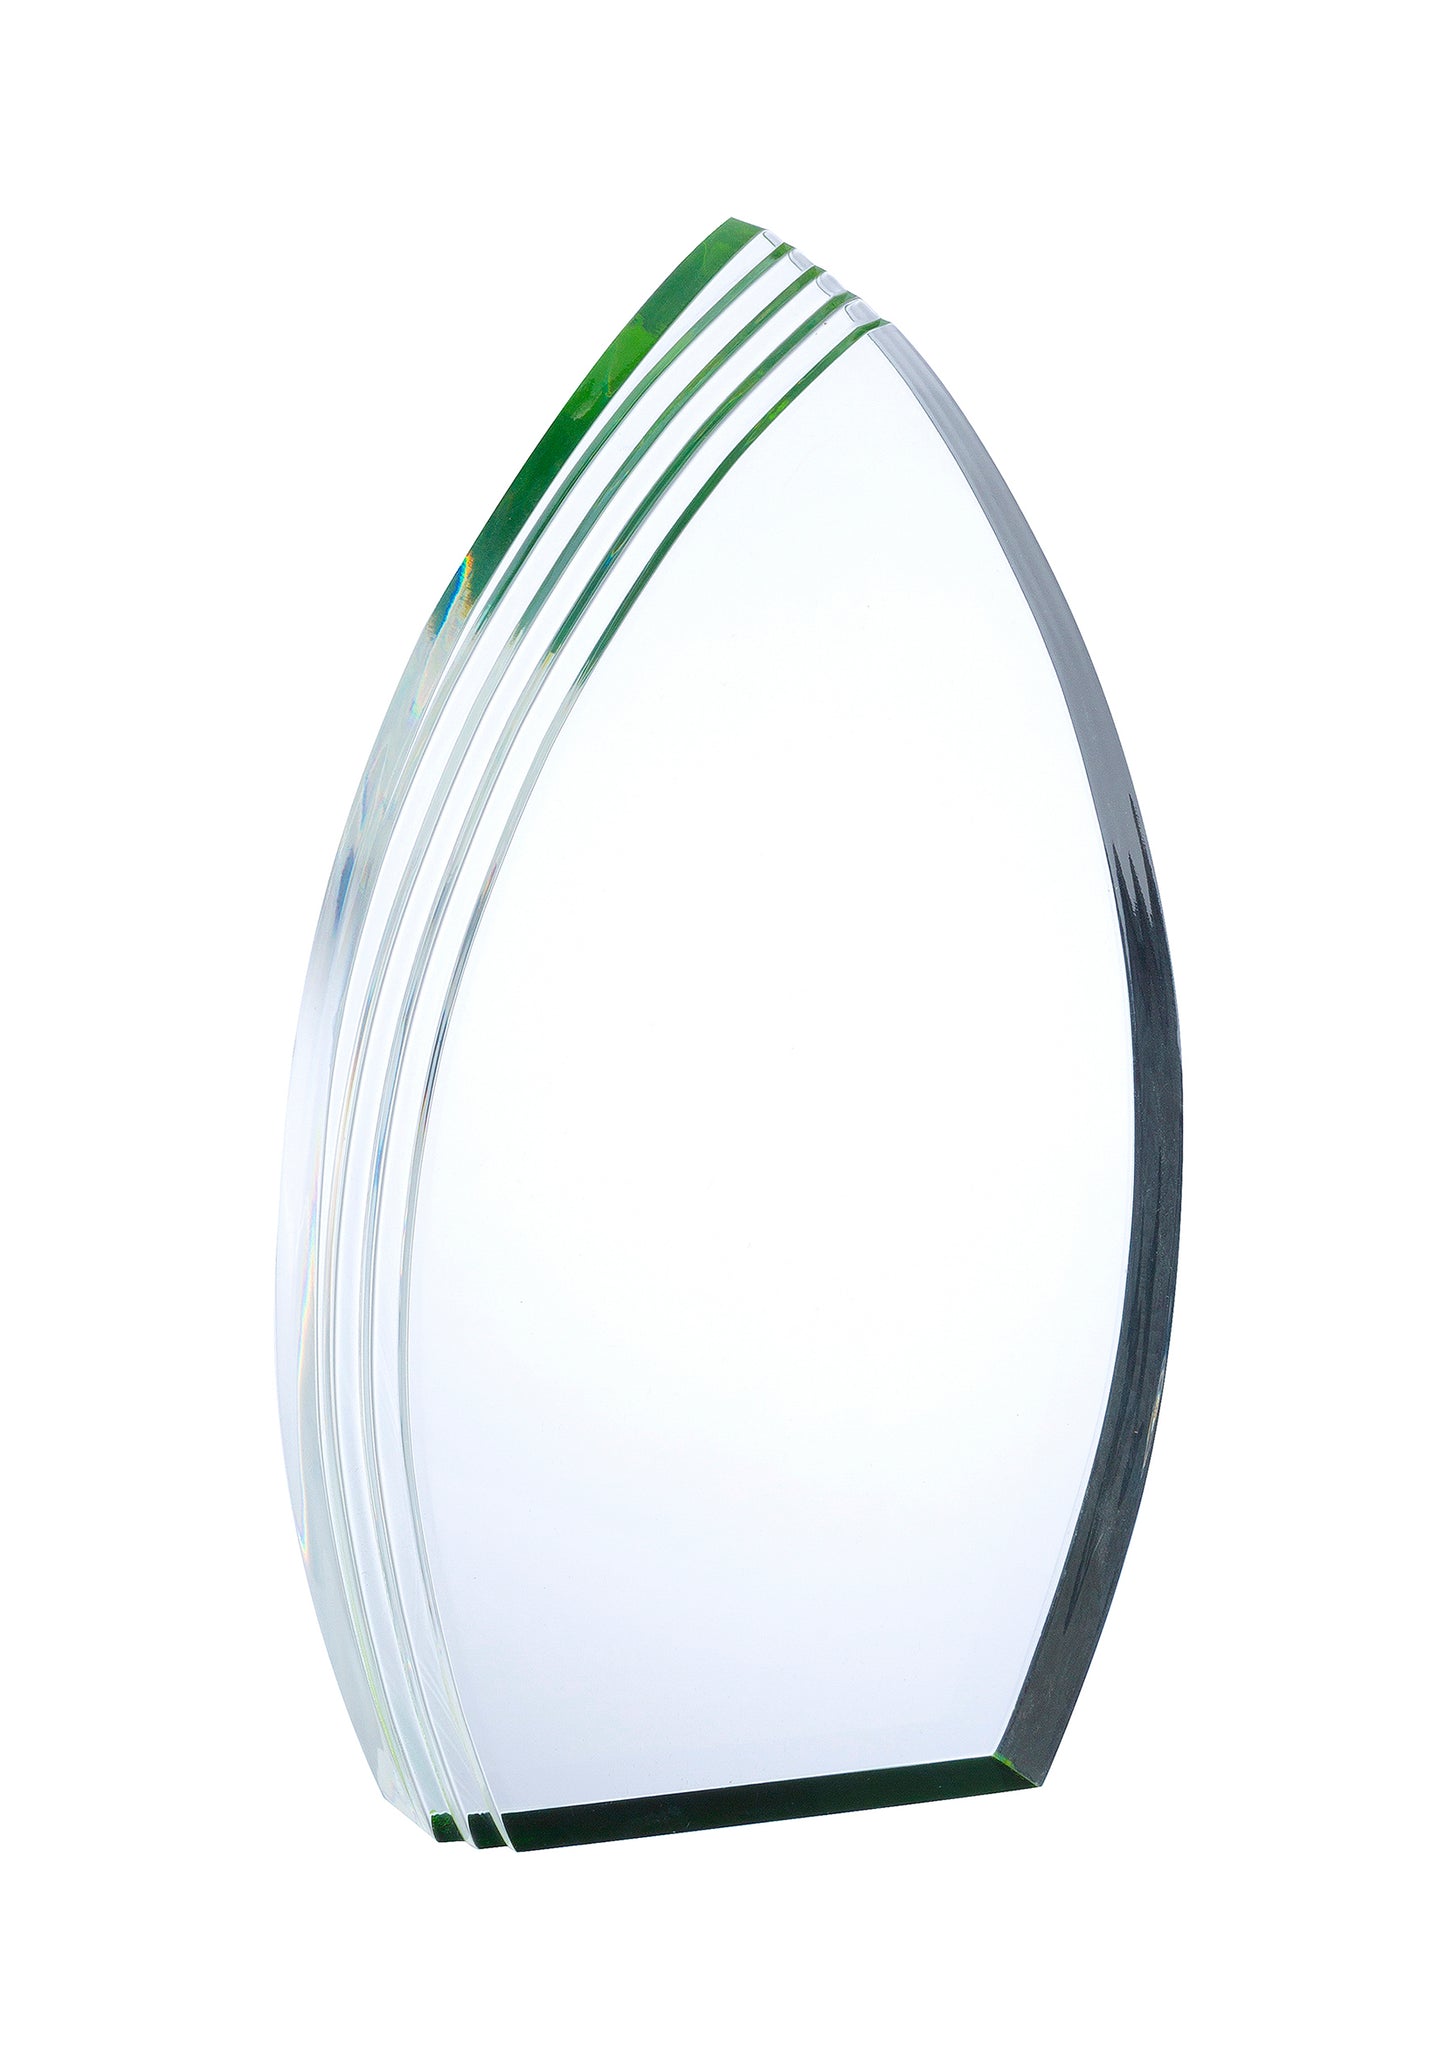 LG Acrylic Award